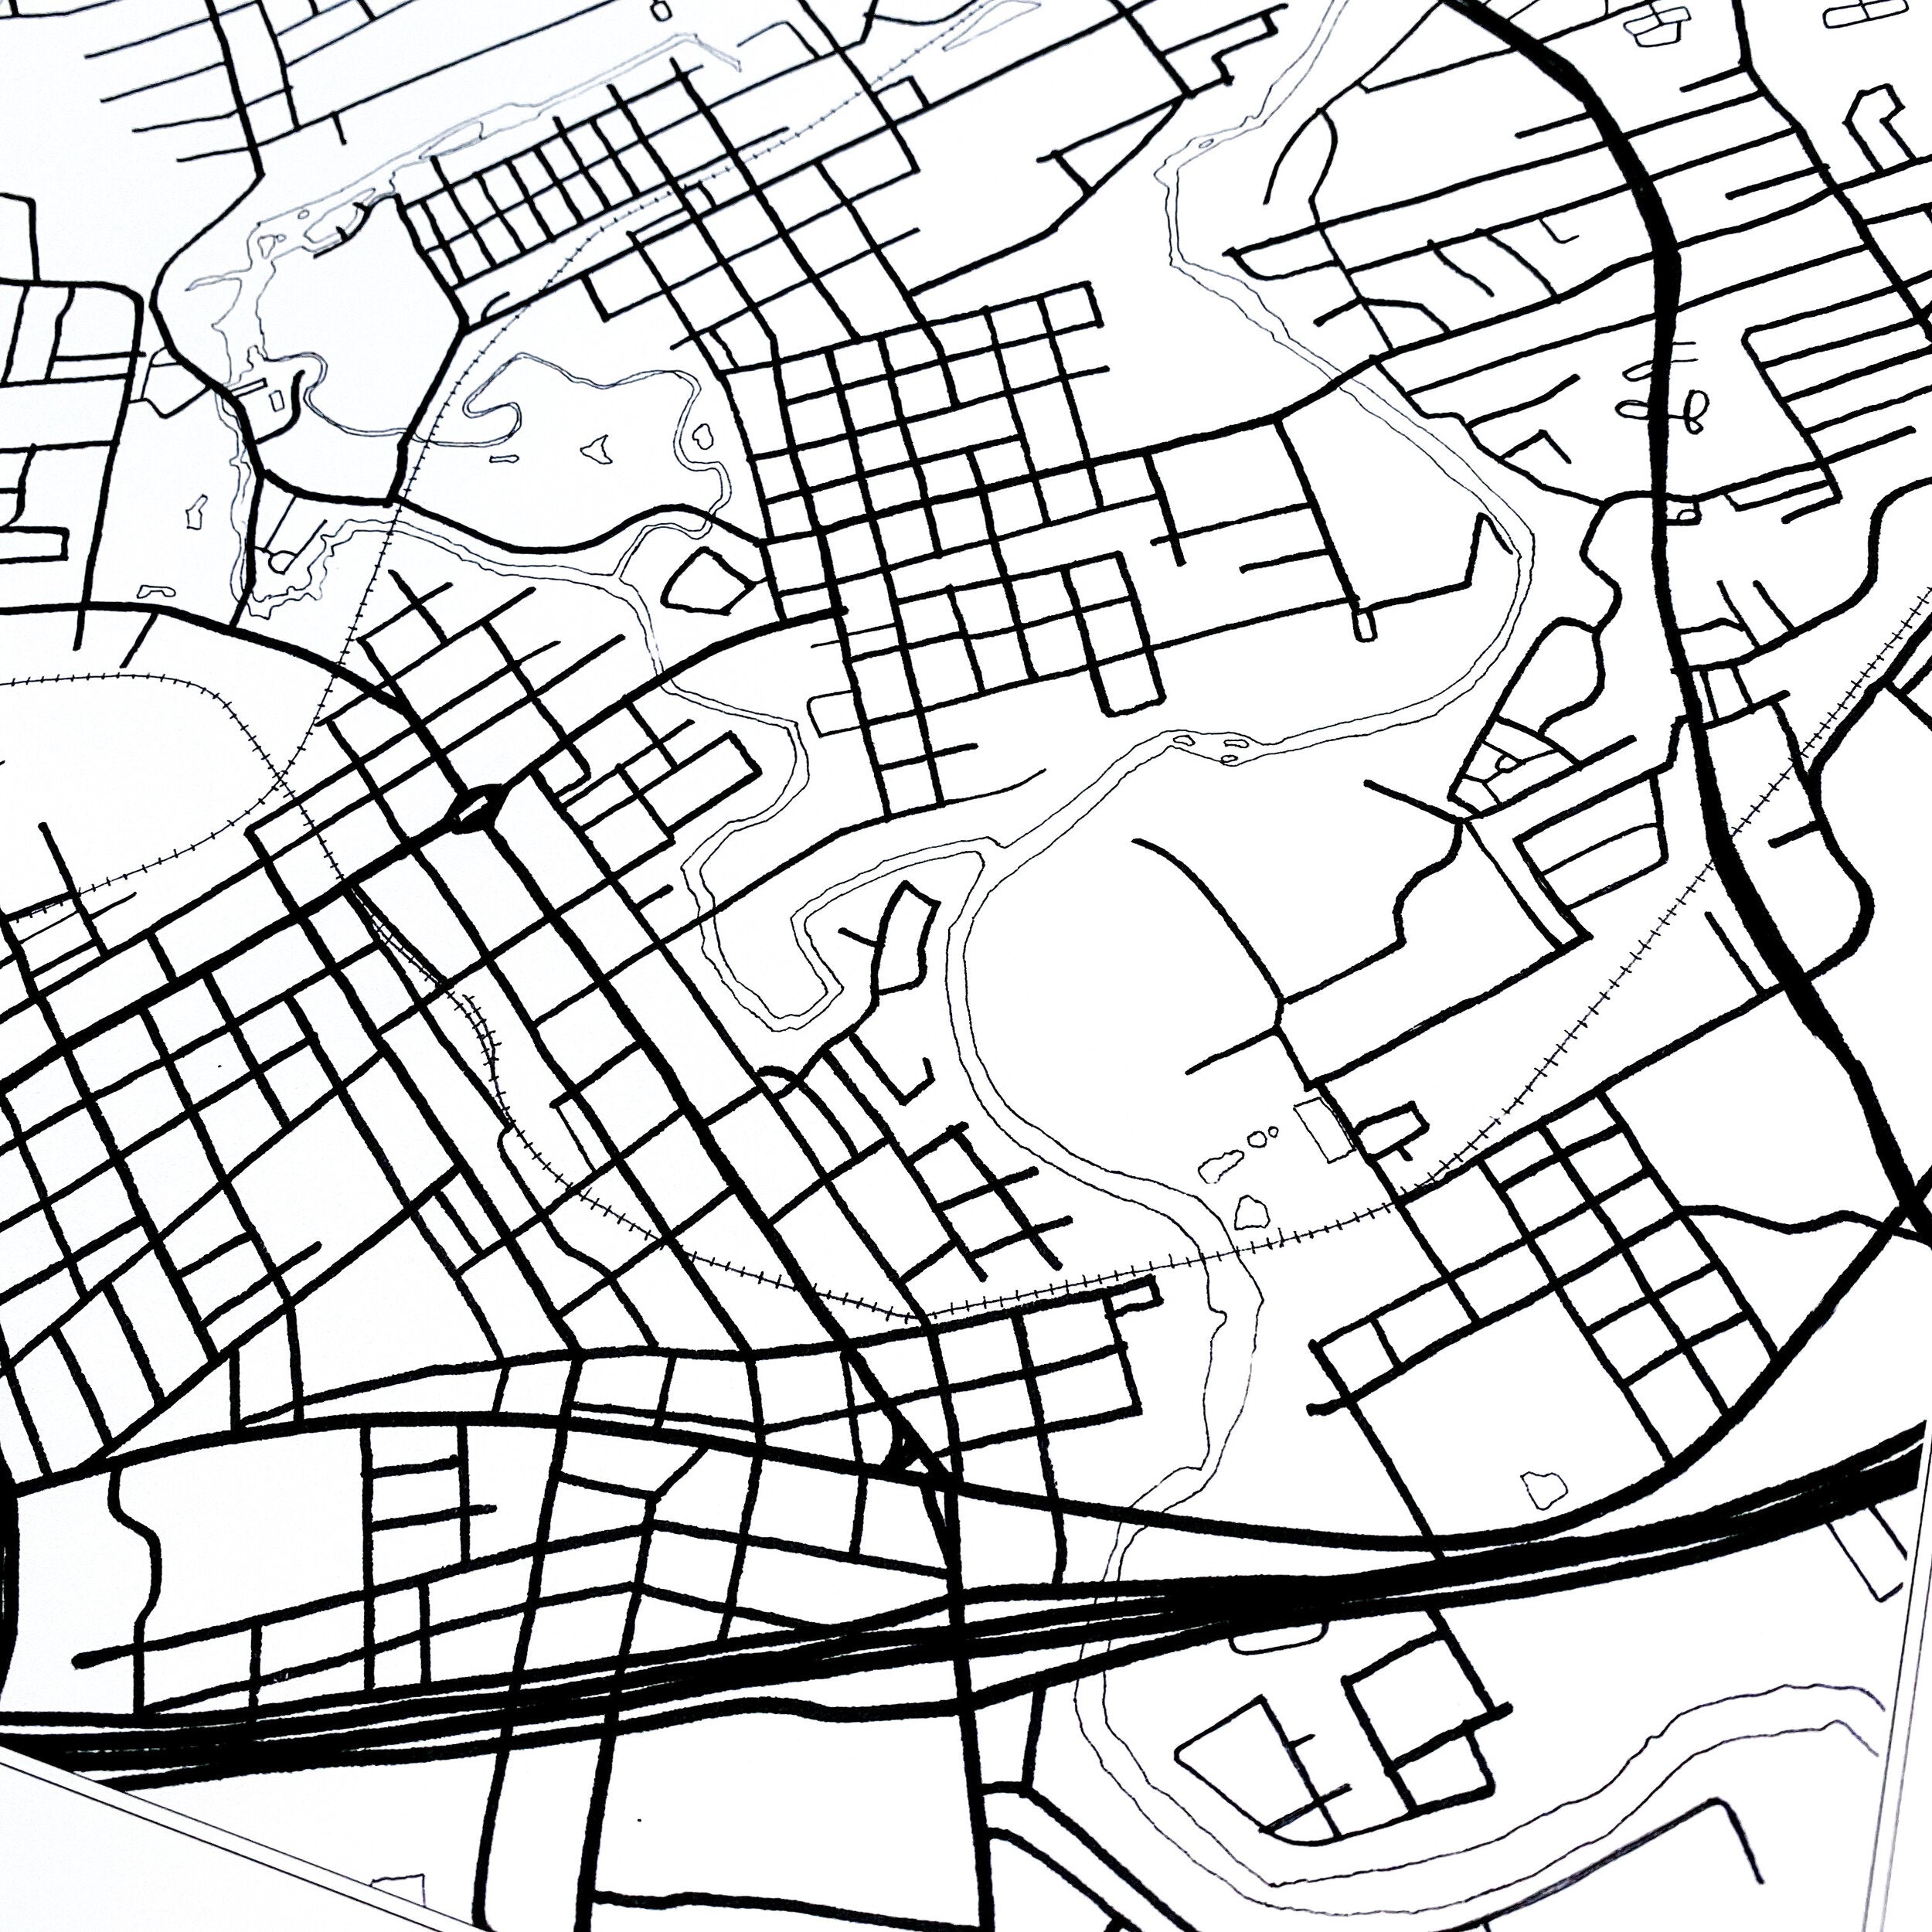 NEW BRAUNFELS City Lines Map: PRINT